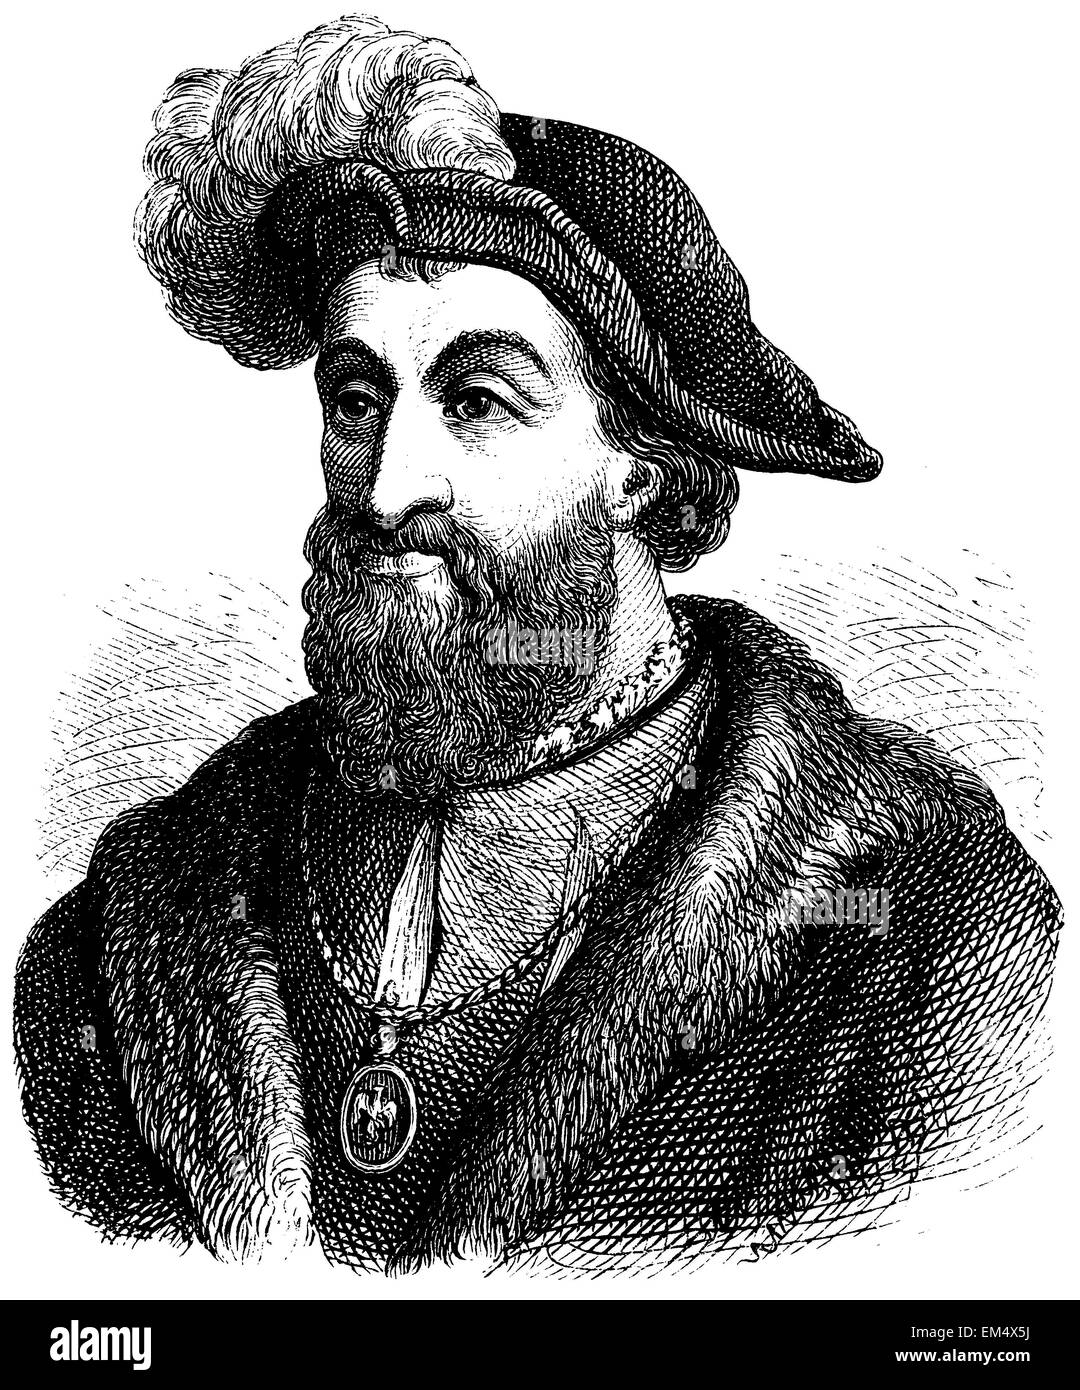 Franz i., König von Frankreich (b. 12 September 1494 starb am 31 März 1547) Stockfoto